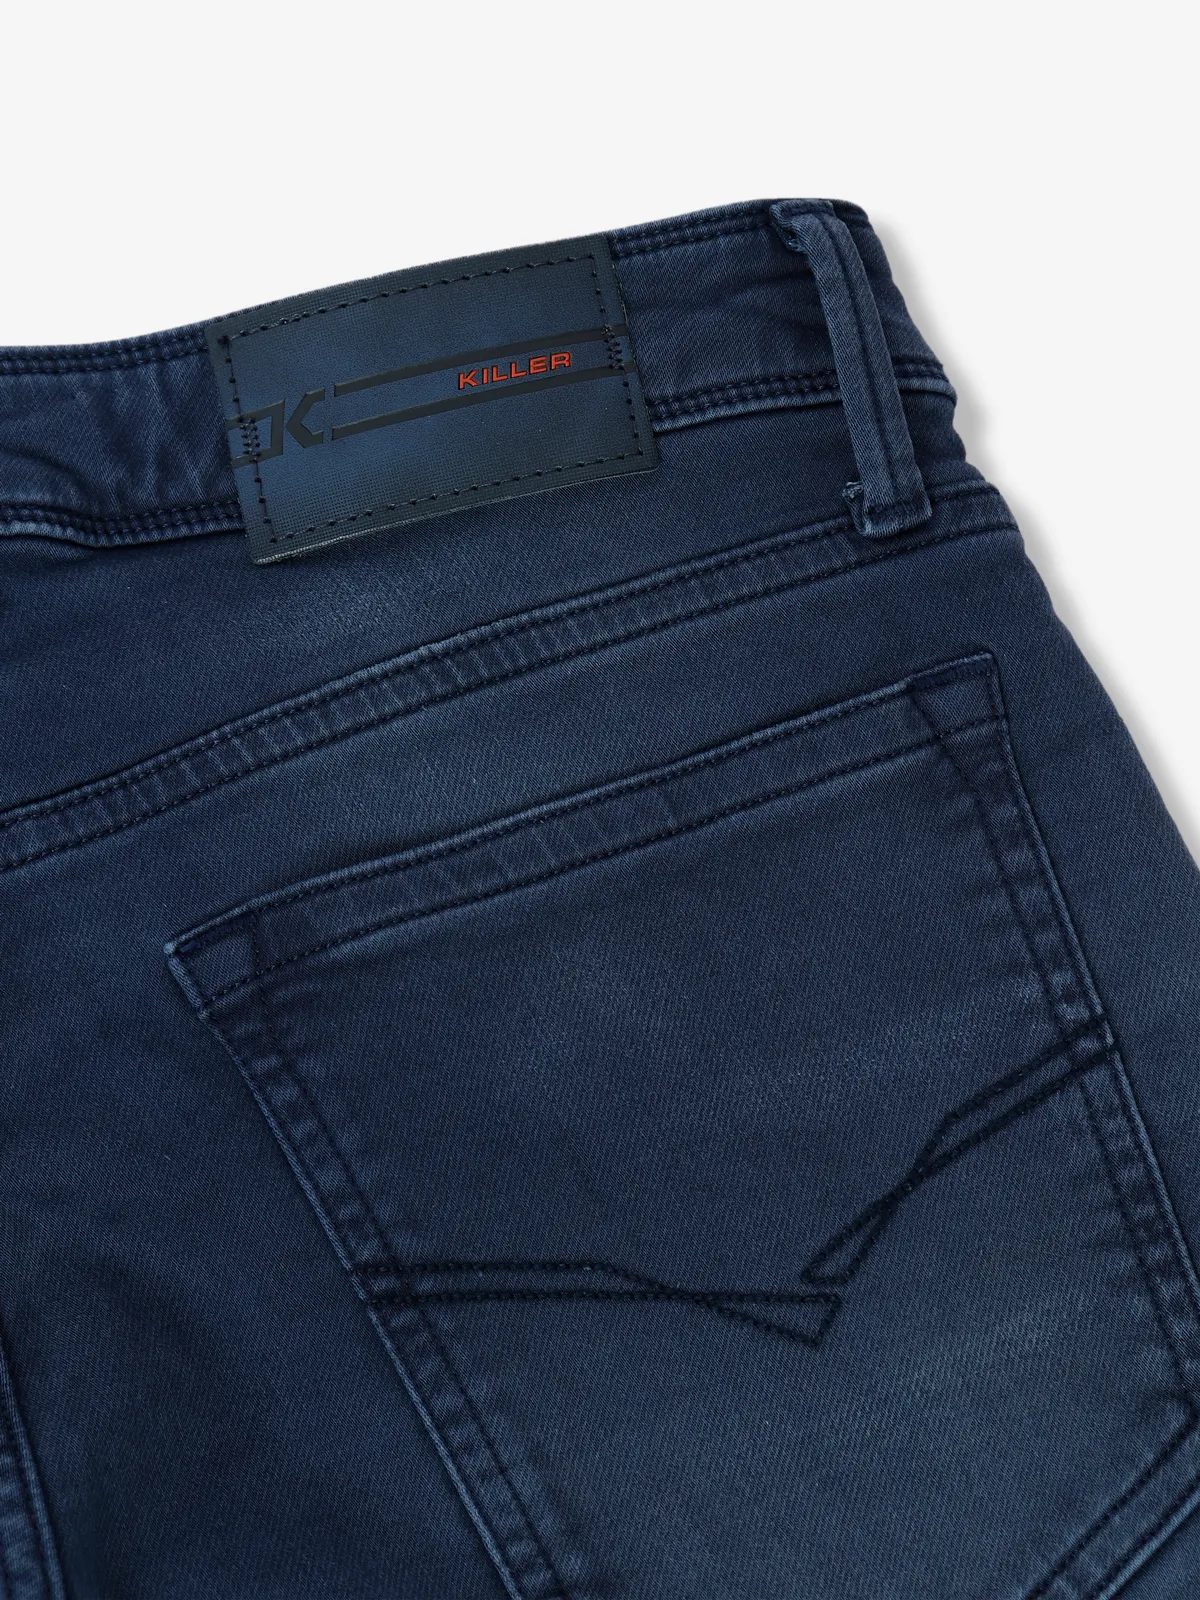 Killer washed skinny fit jeans in dark blue